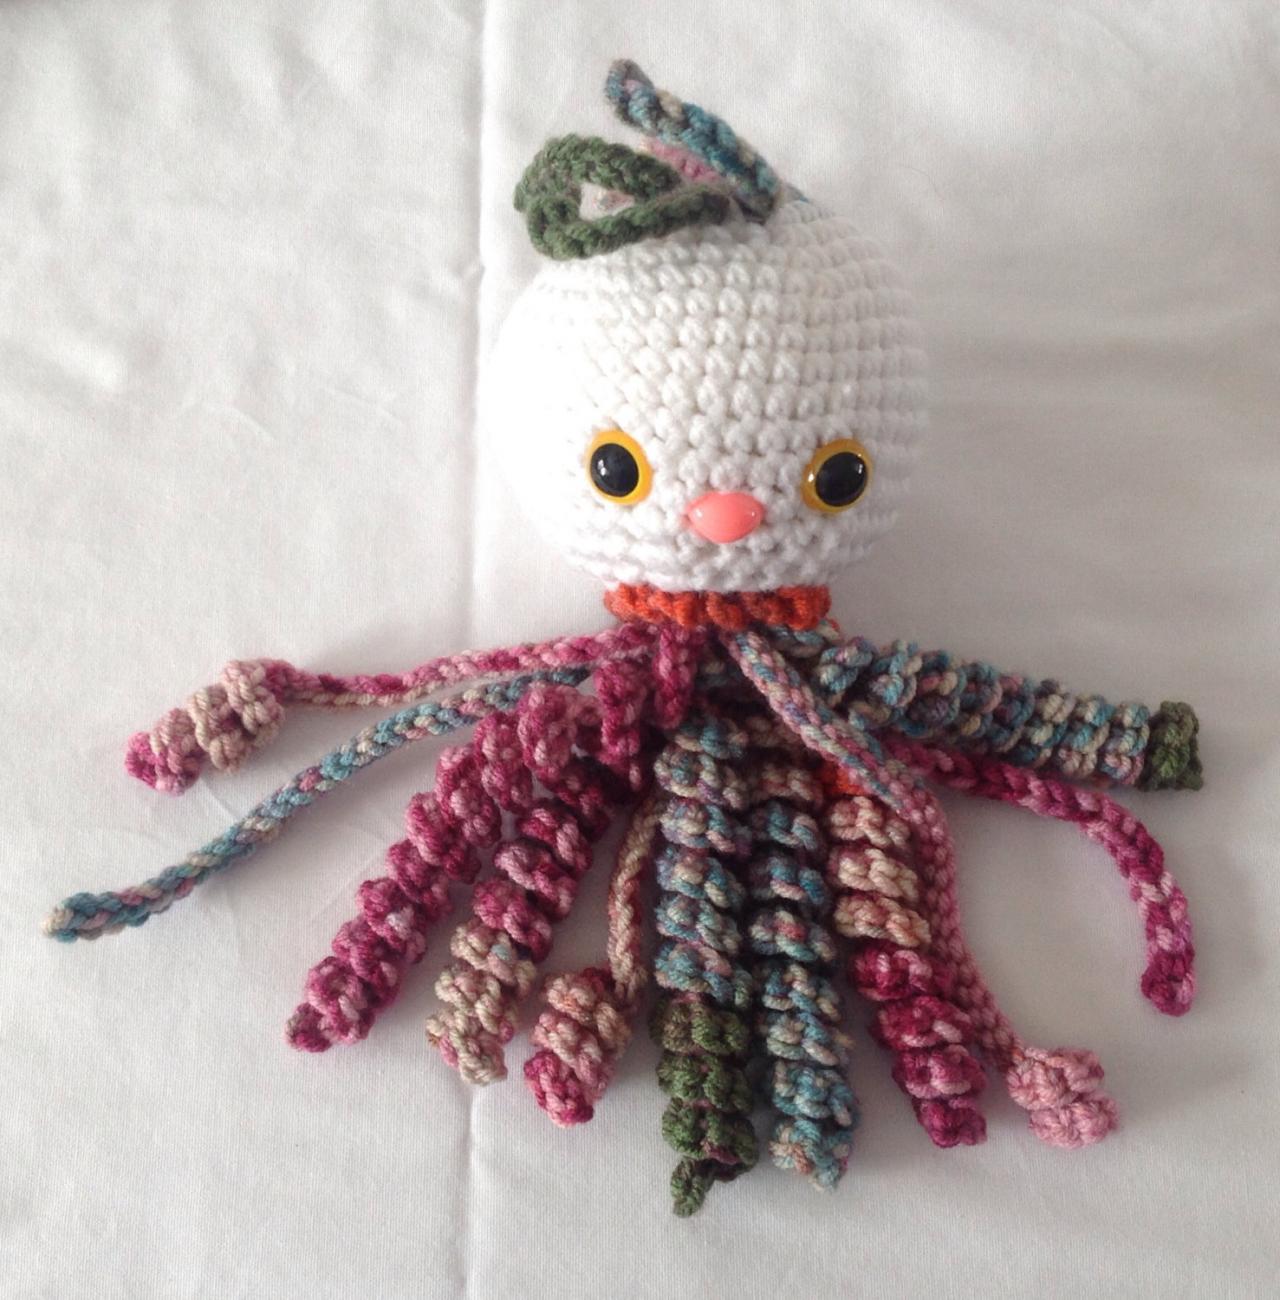 Crochet Baby Rattle Crochet Jellyfish Handmade Baby Toy Crochet Fish Crochet Toy